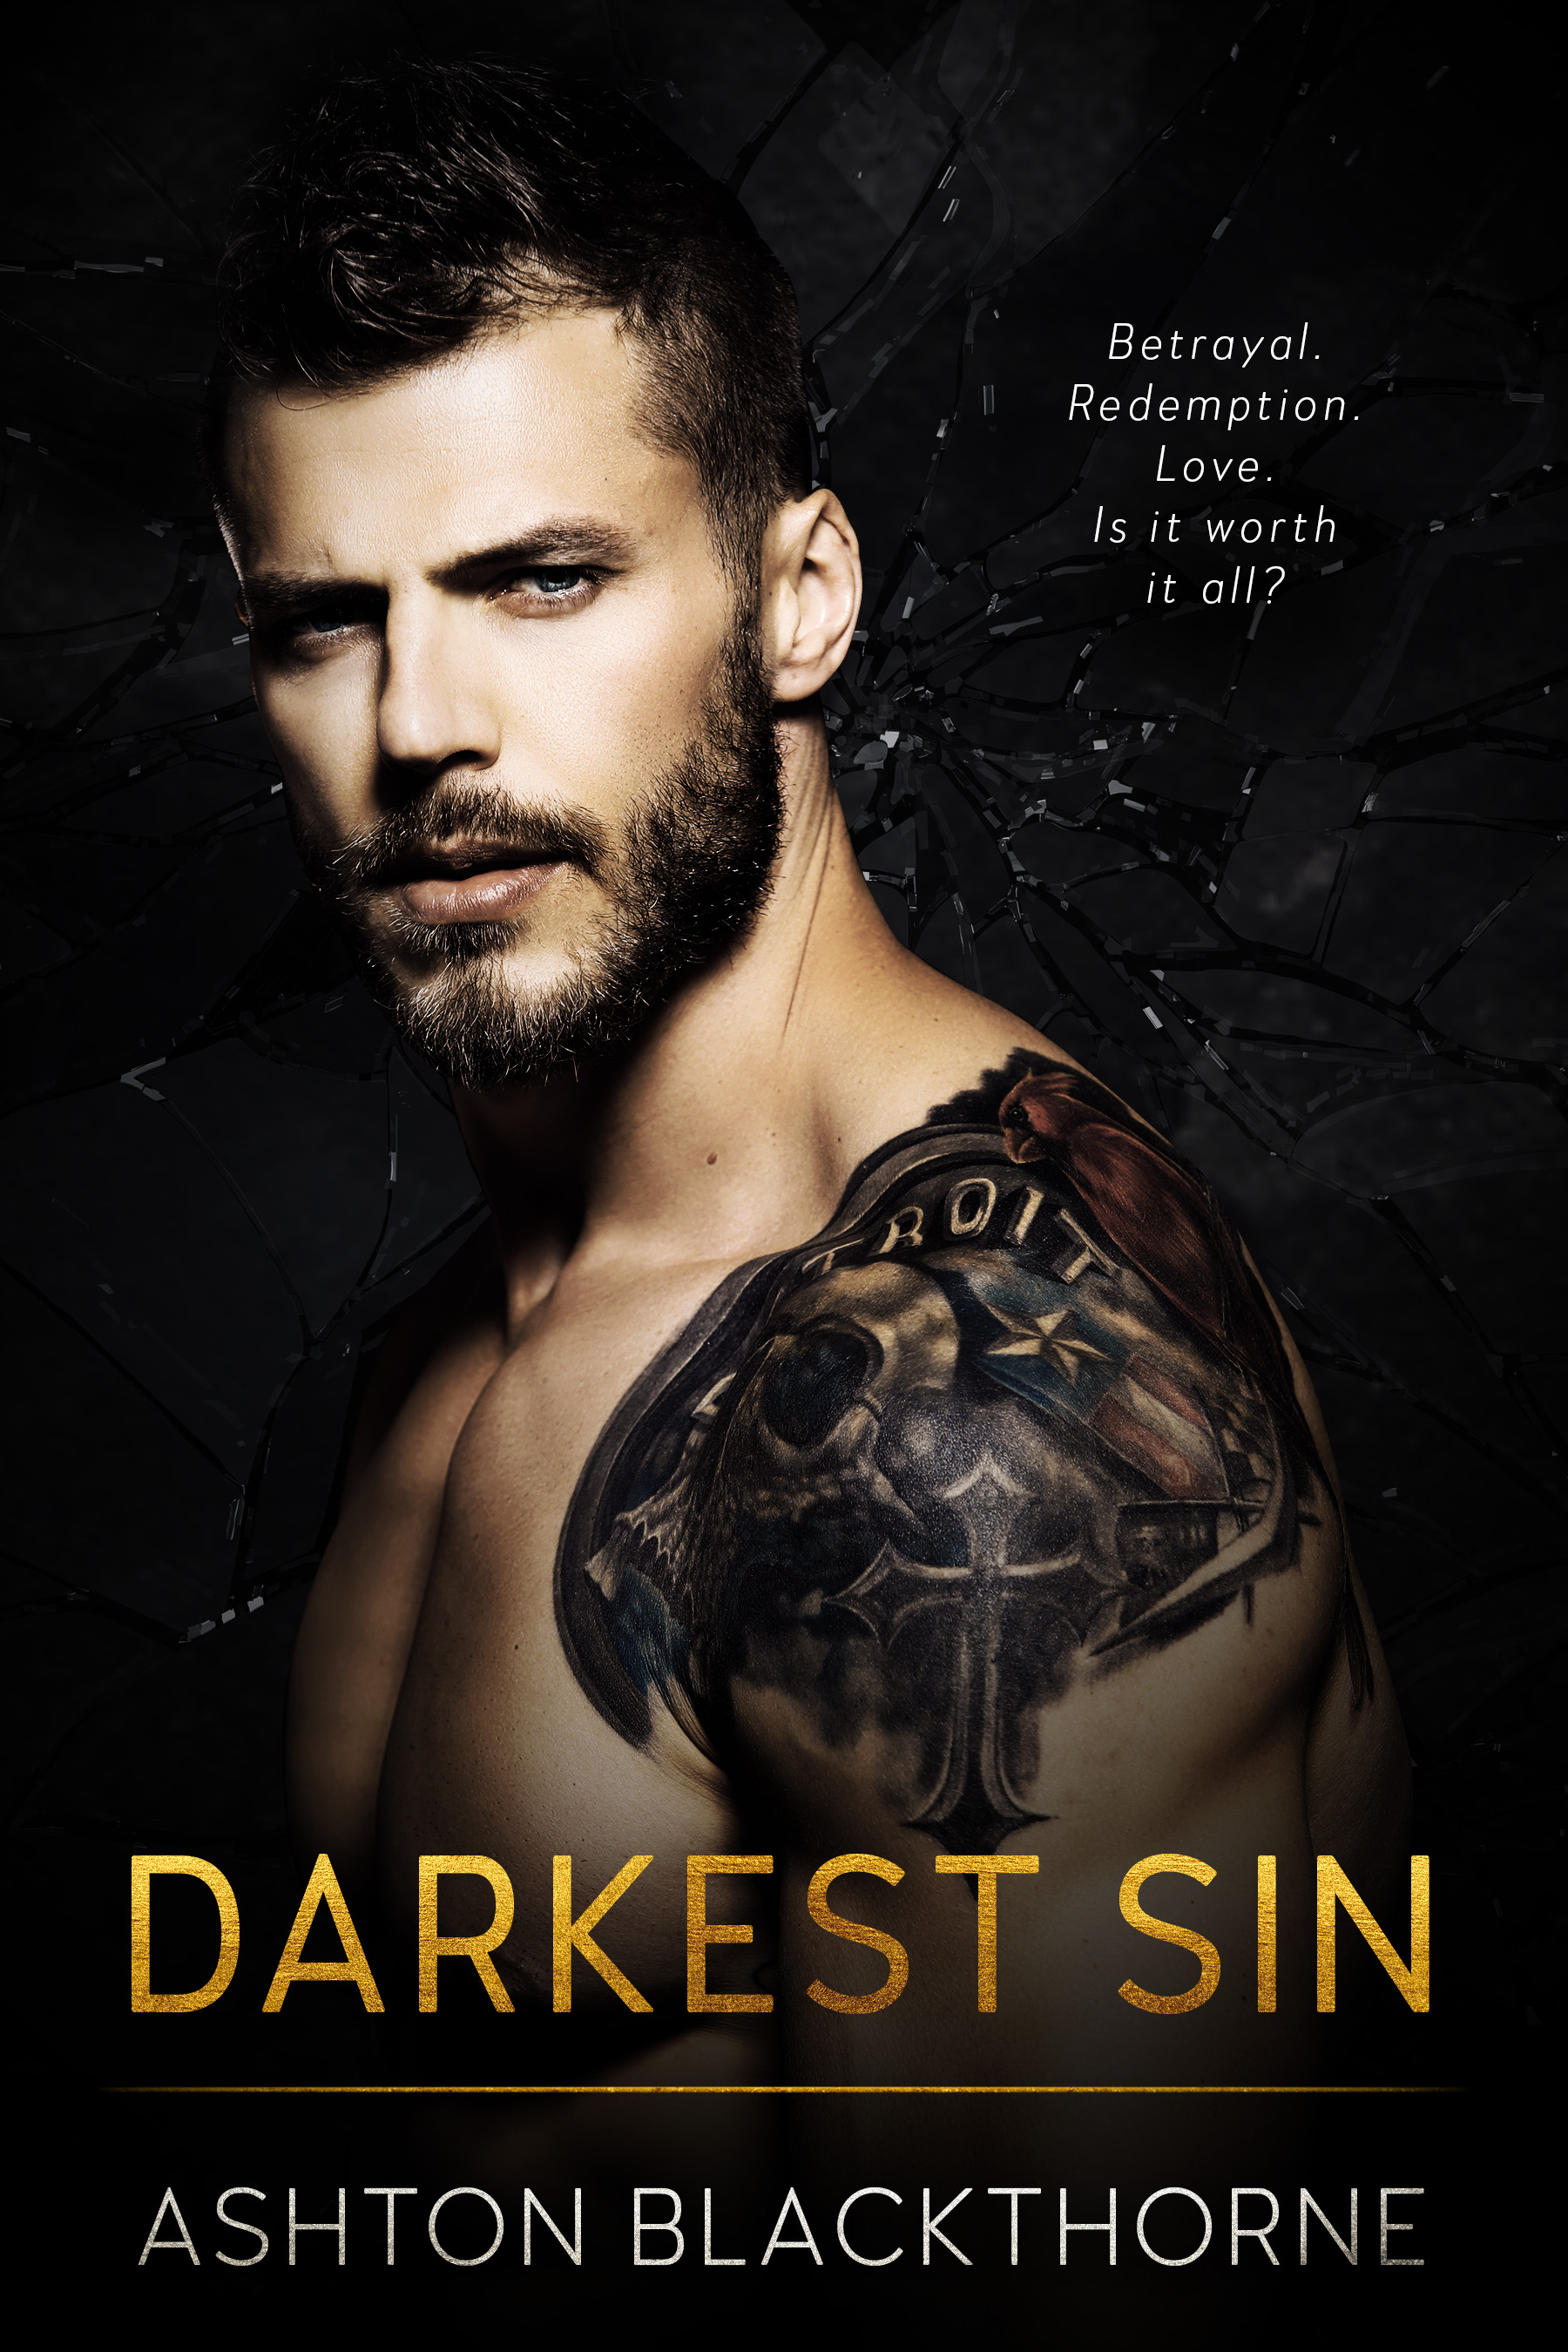 Darkest Sin by Ashton Blackthorne [Release Blitz]